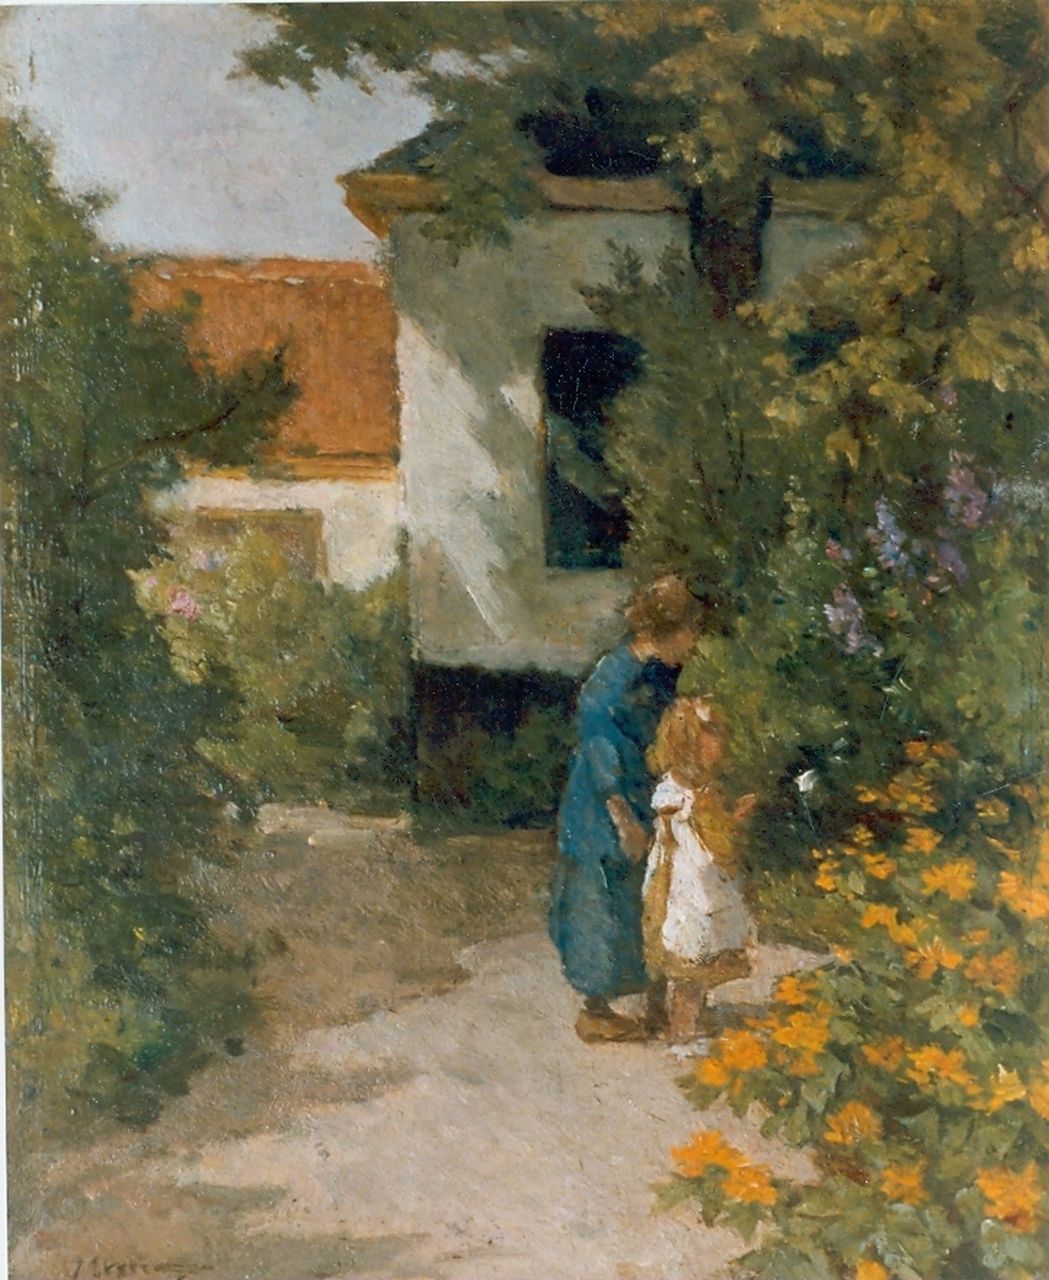 Akkeringa J.E.H.  | 'Johannes Evert' Hendrik Akkeringa, Twee meisjes in bloementuin, olieverf op doek op paneel 28,3 x 23,0 cm, gesigneerd linksonder